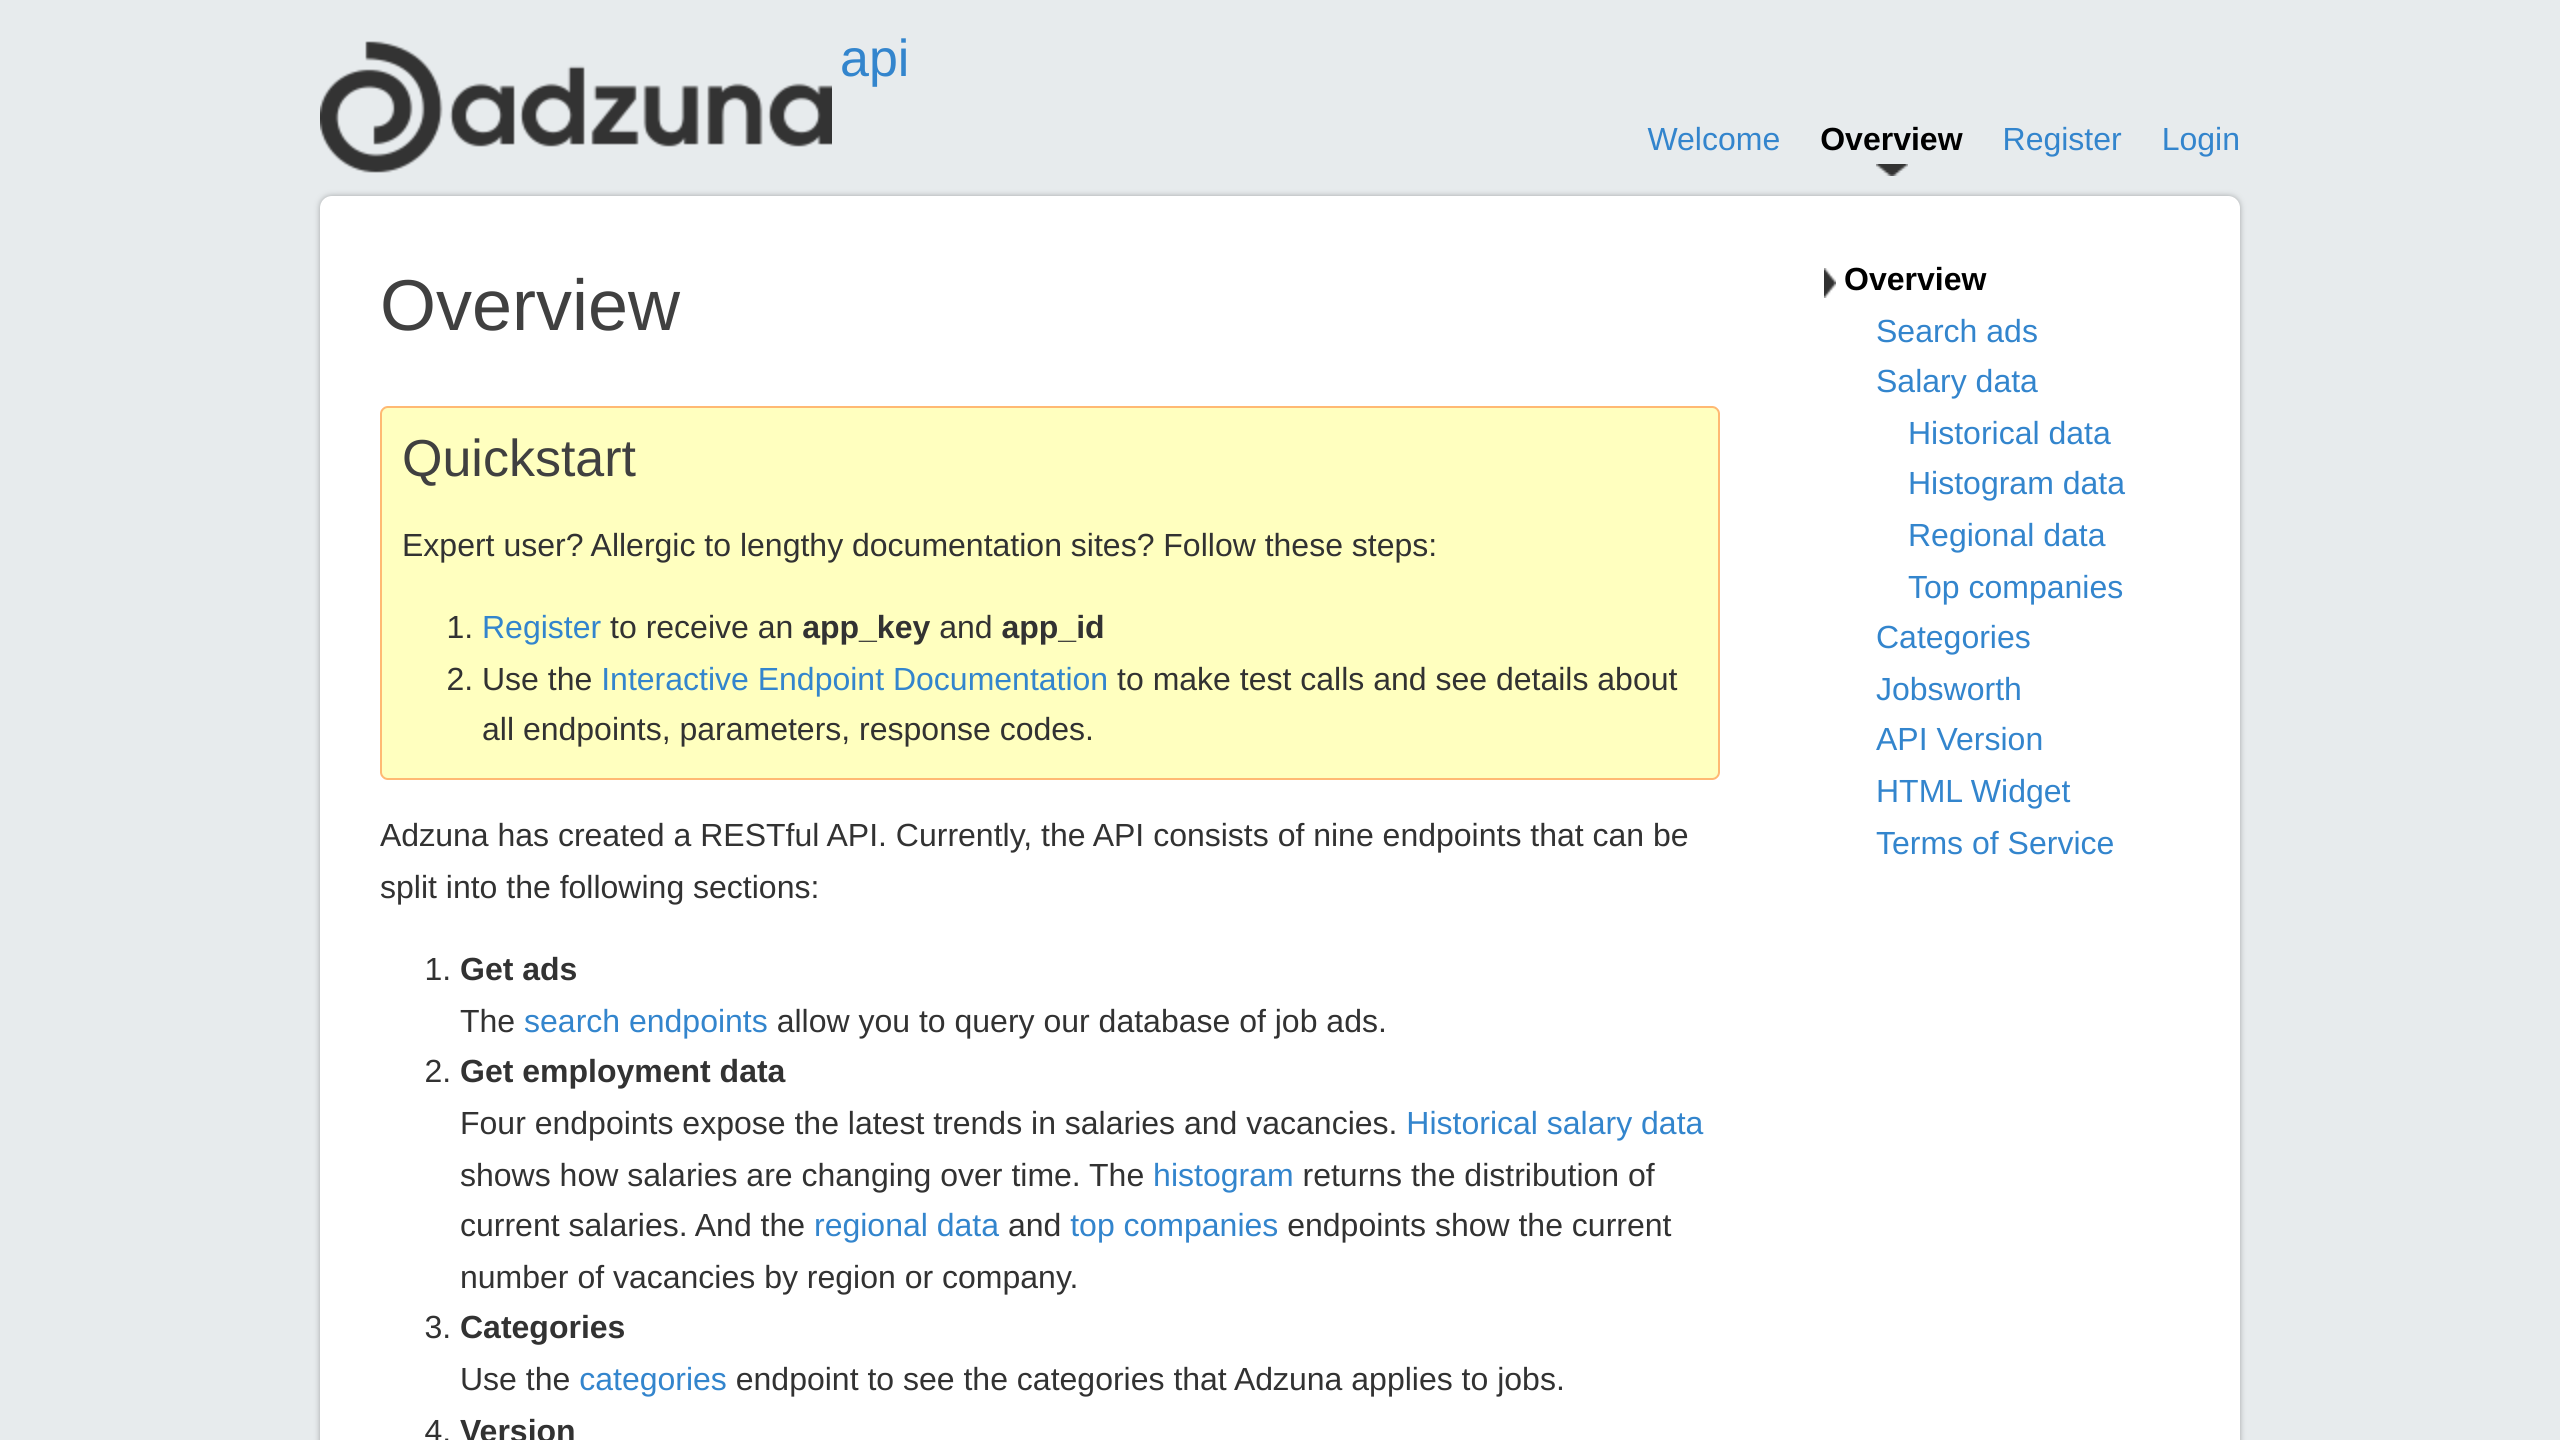 Adzuna's website screenshot